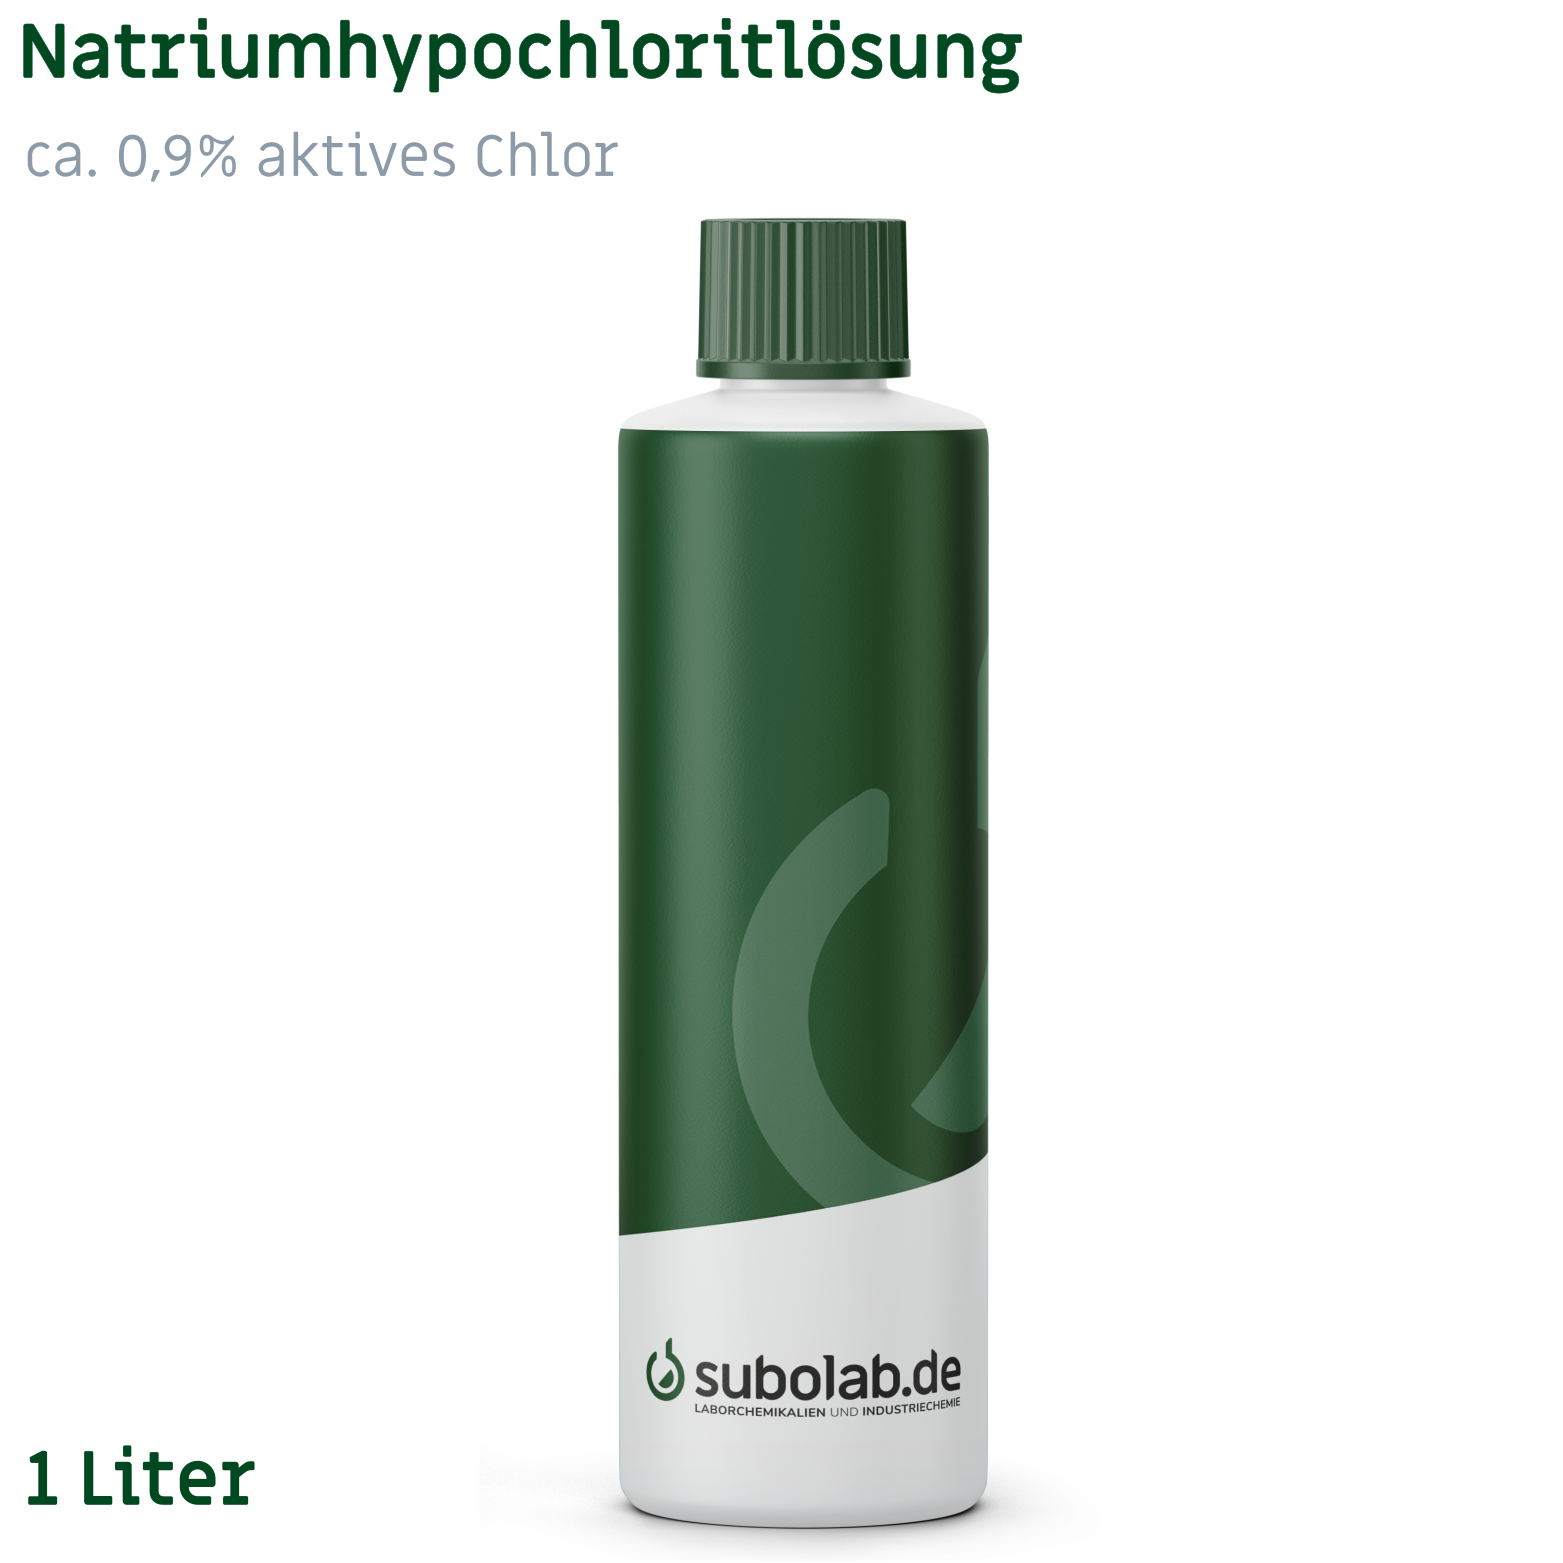 Bild von Natriumhypochloritlösung ca. 0,9% aktives Chlor (1 Liter)